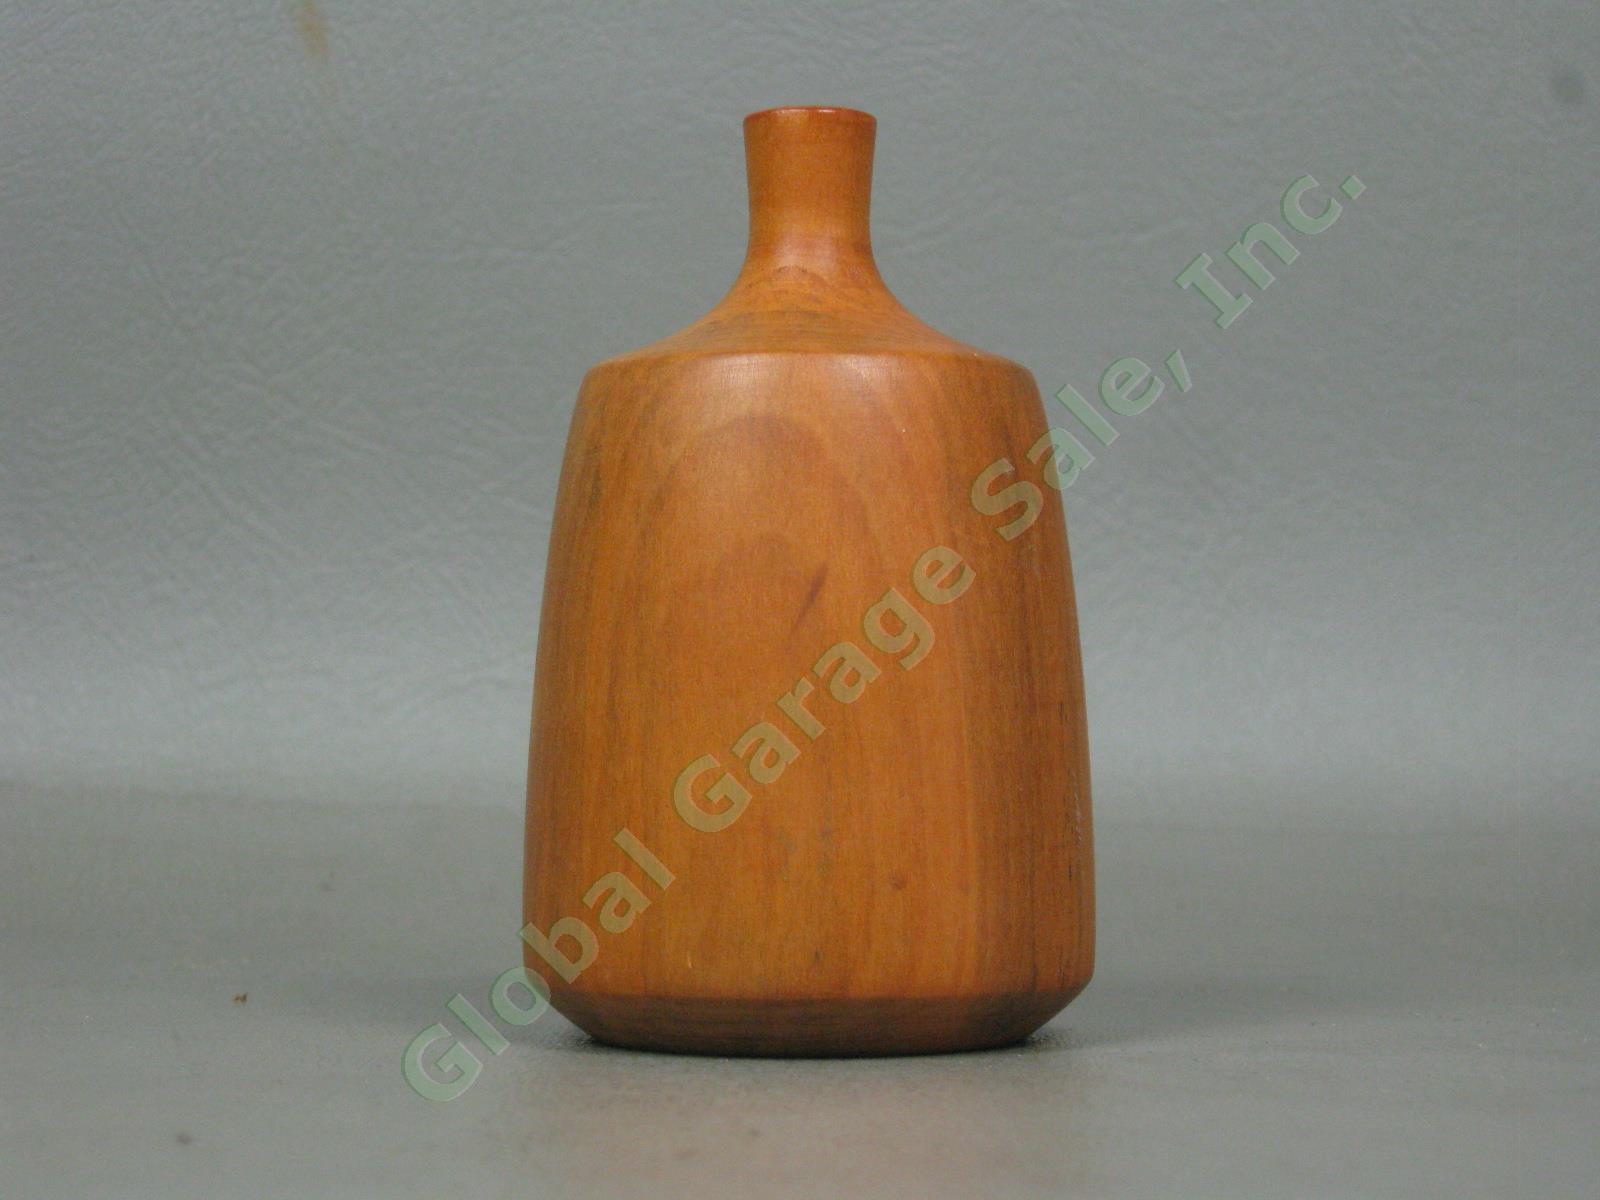 Rude Osolnik Originals Signed Wood Turned Bud Twig Vase Weed Pot Rare Maple NR! 1